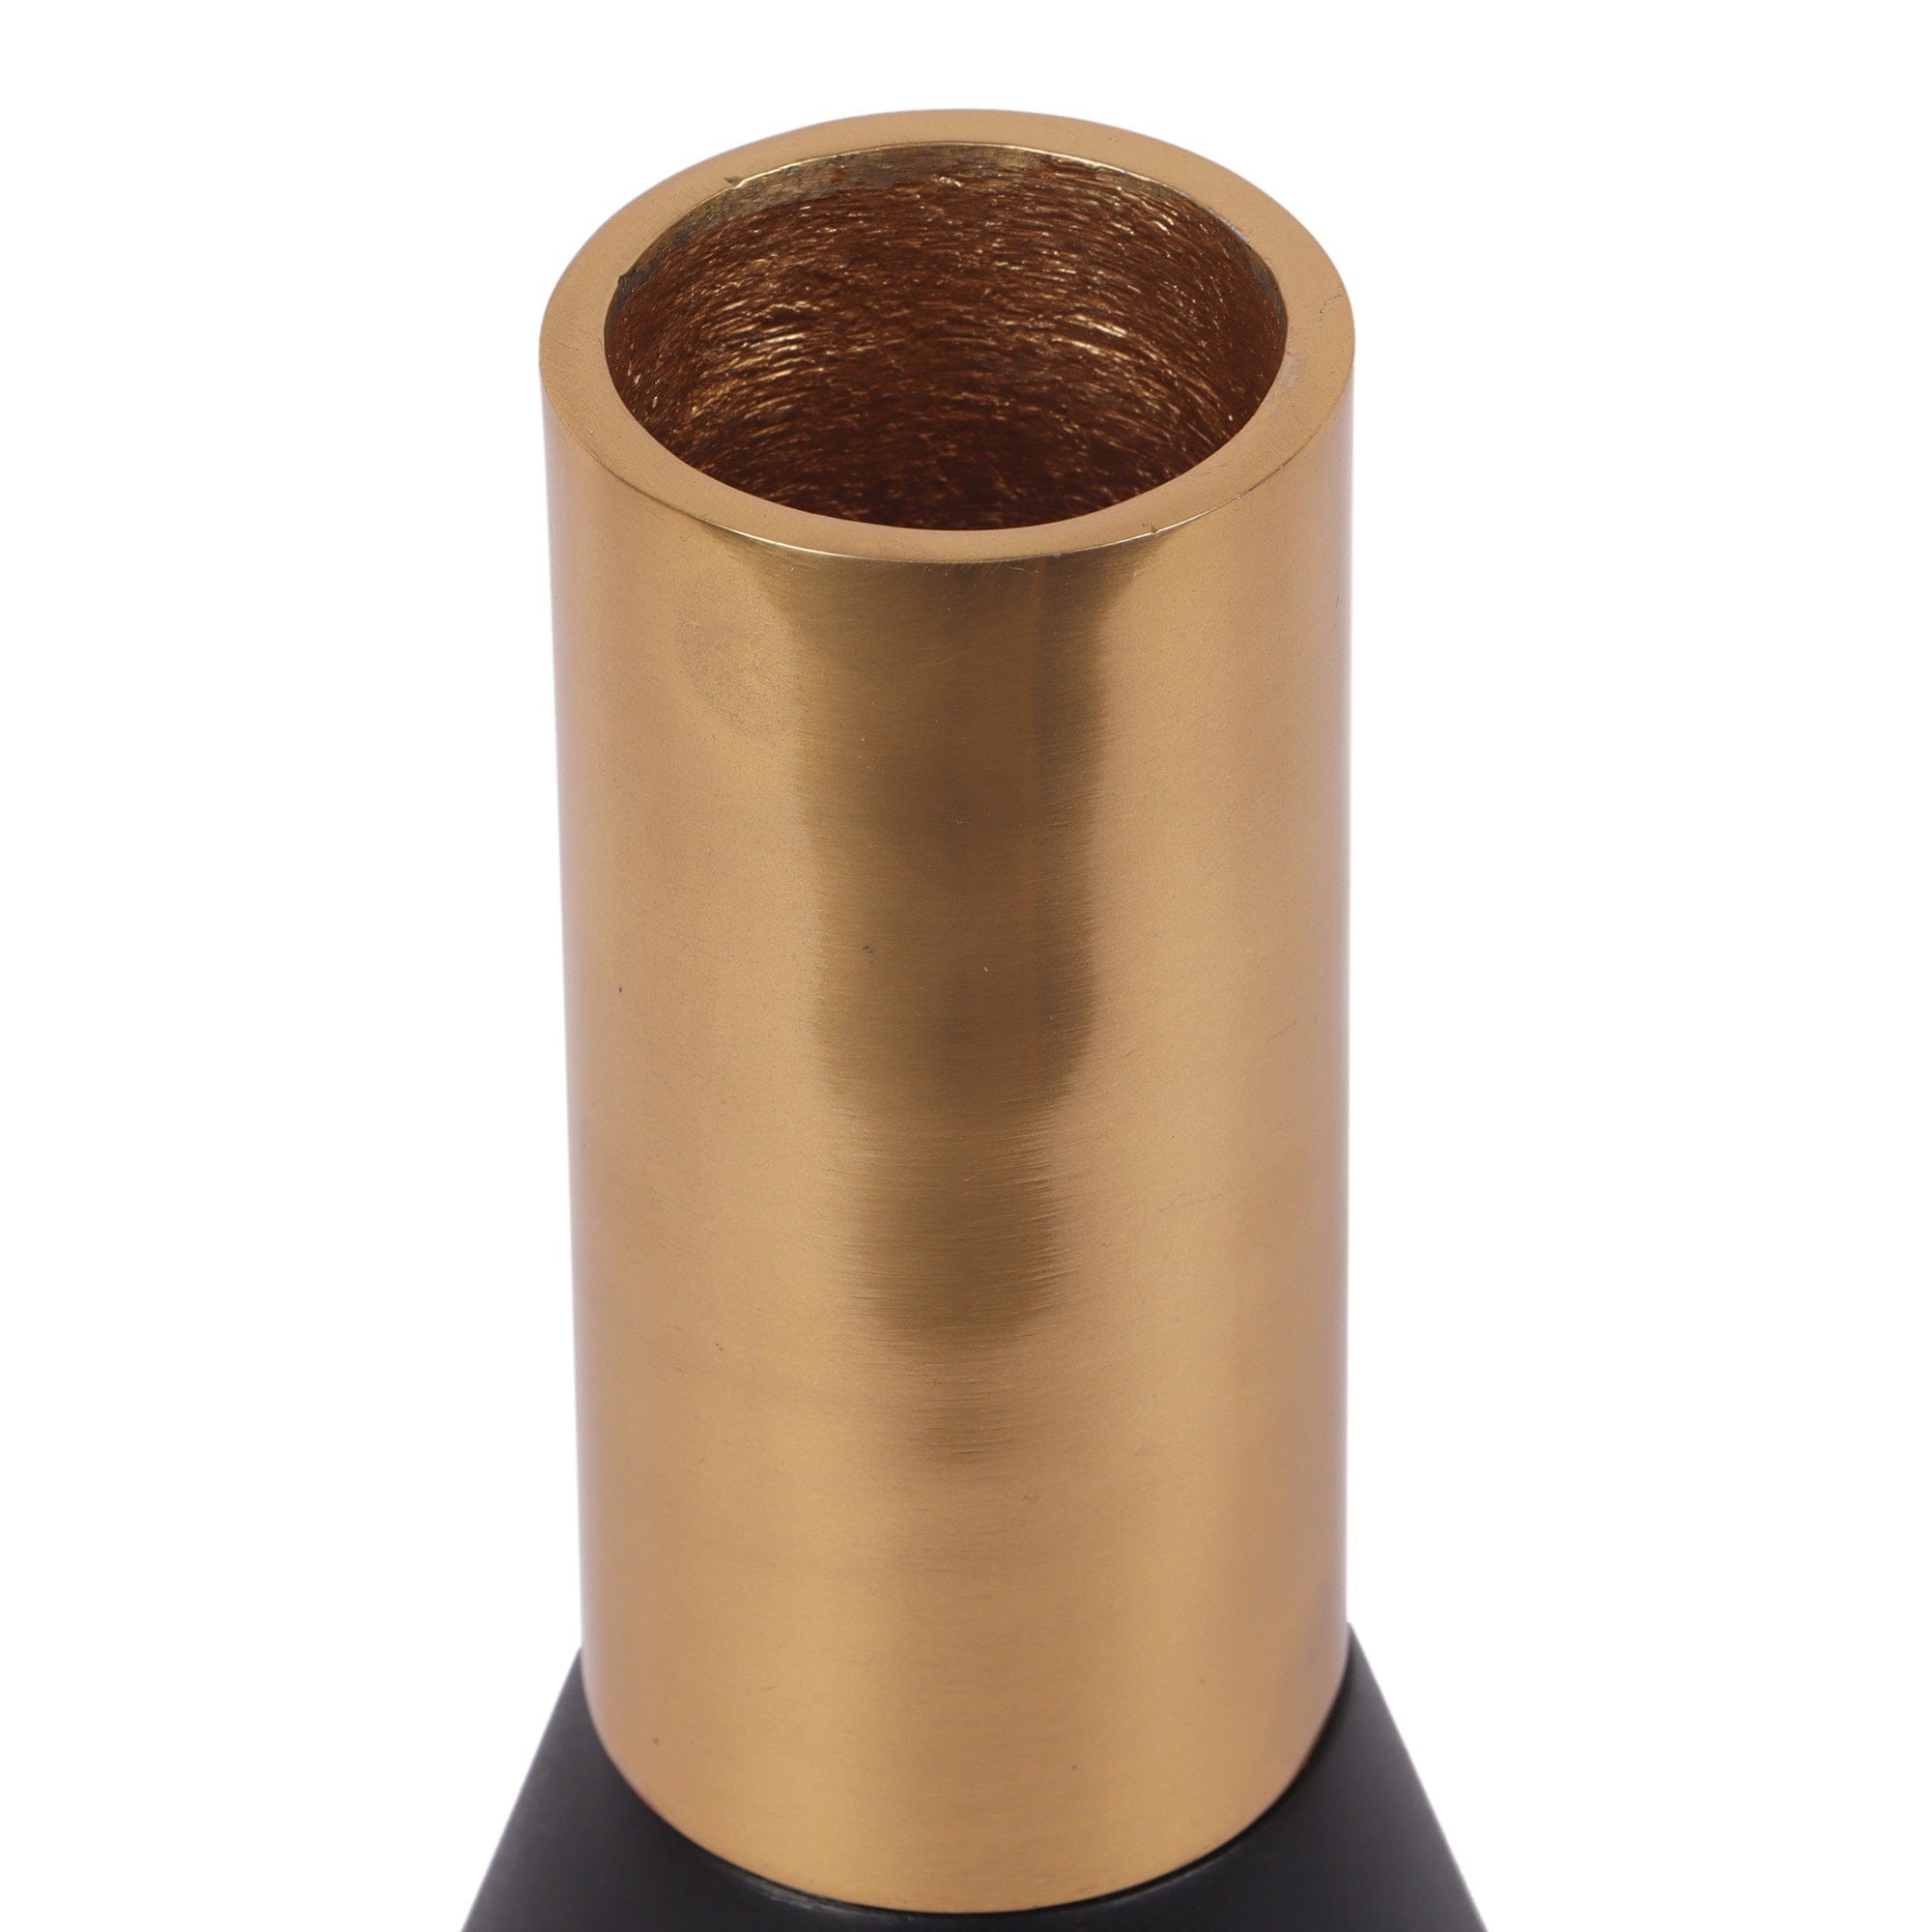 Matt Gold and Black Aluminum Deidra Table Vase